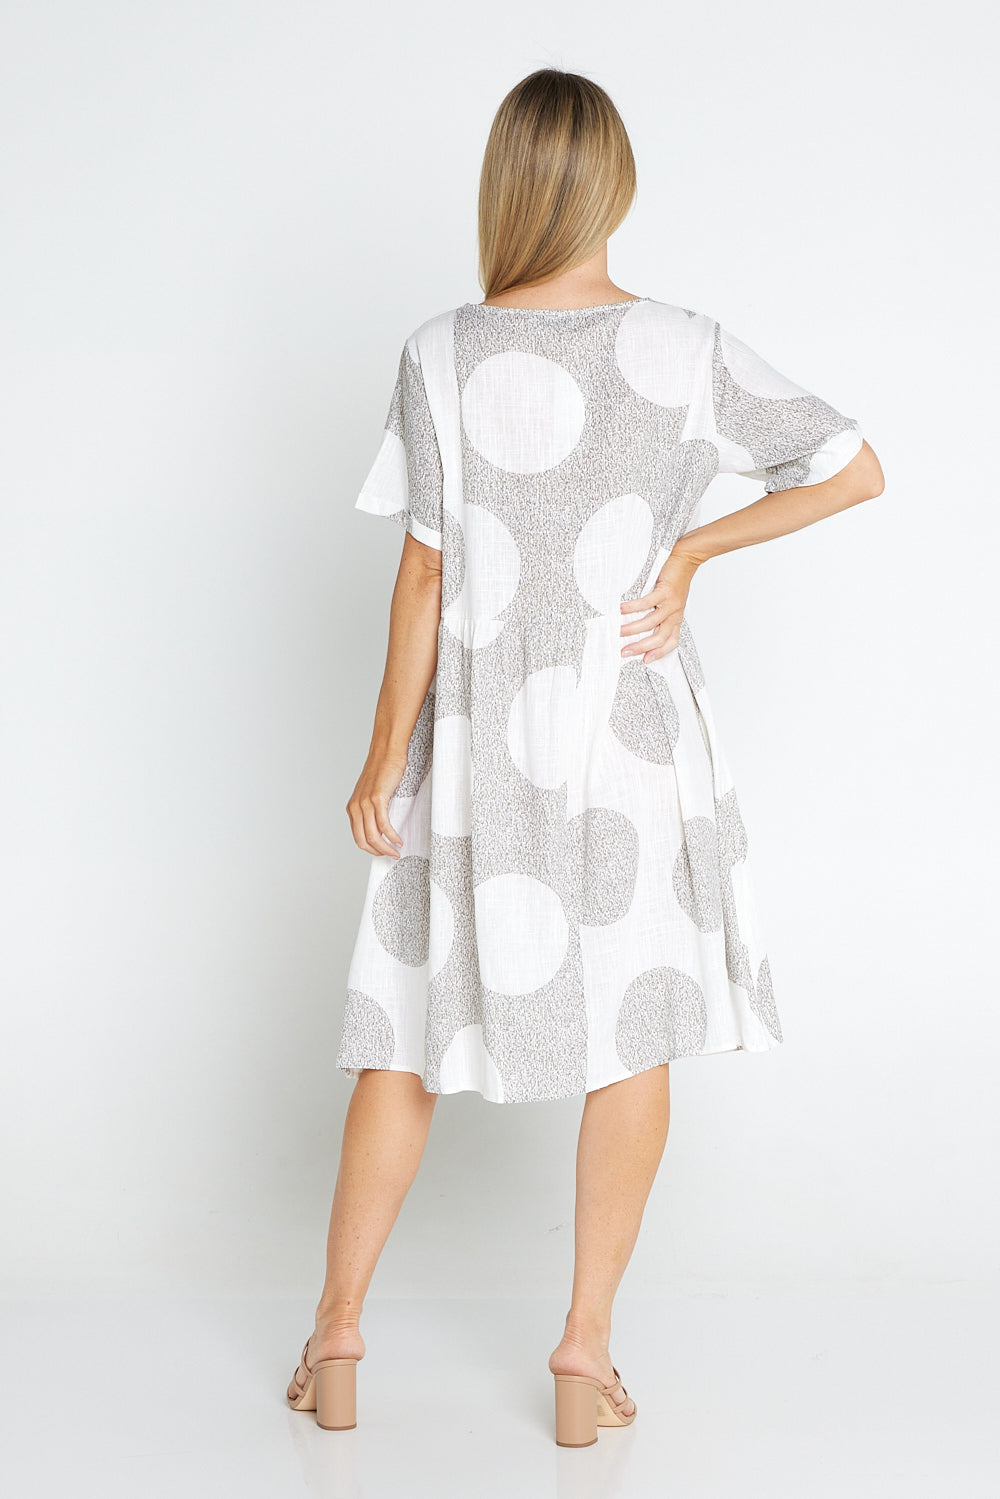 Amayah Linen Dress - Brown/White Circles